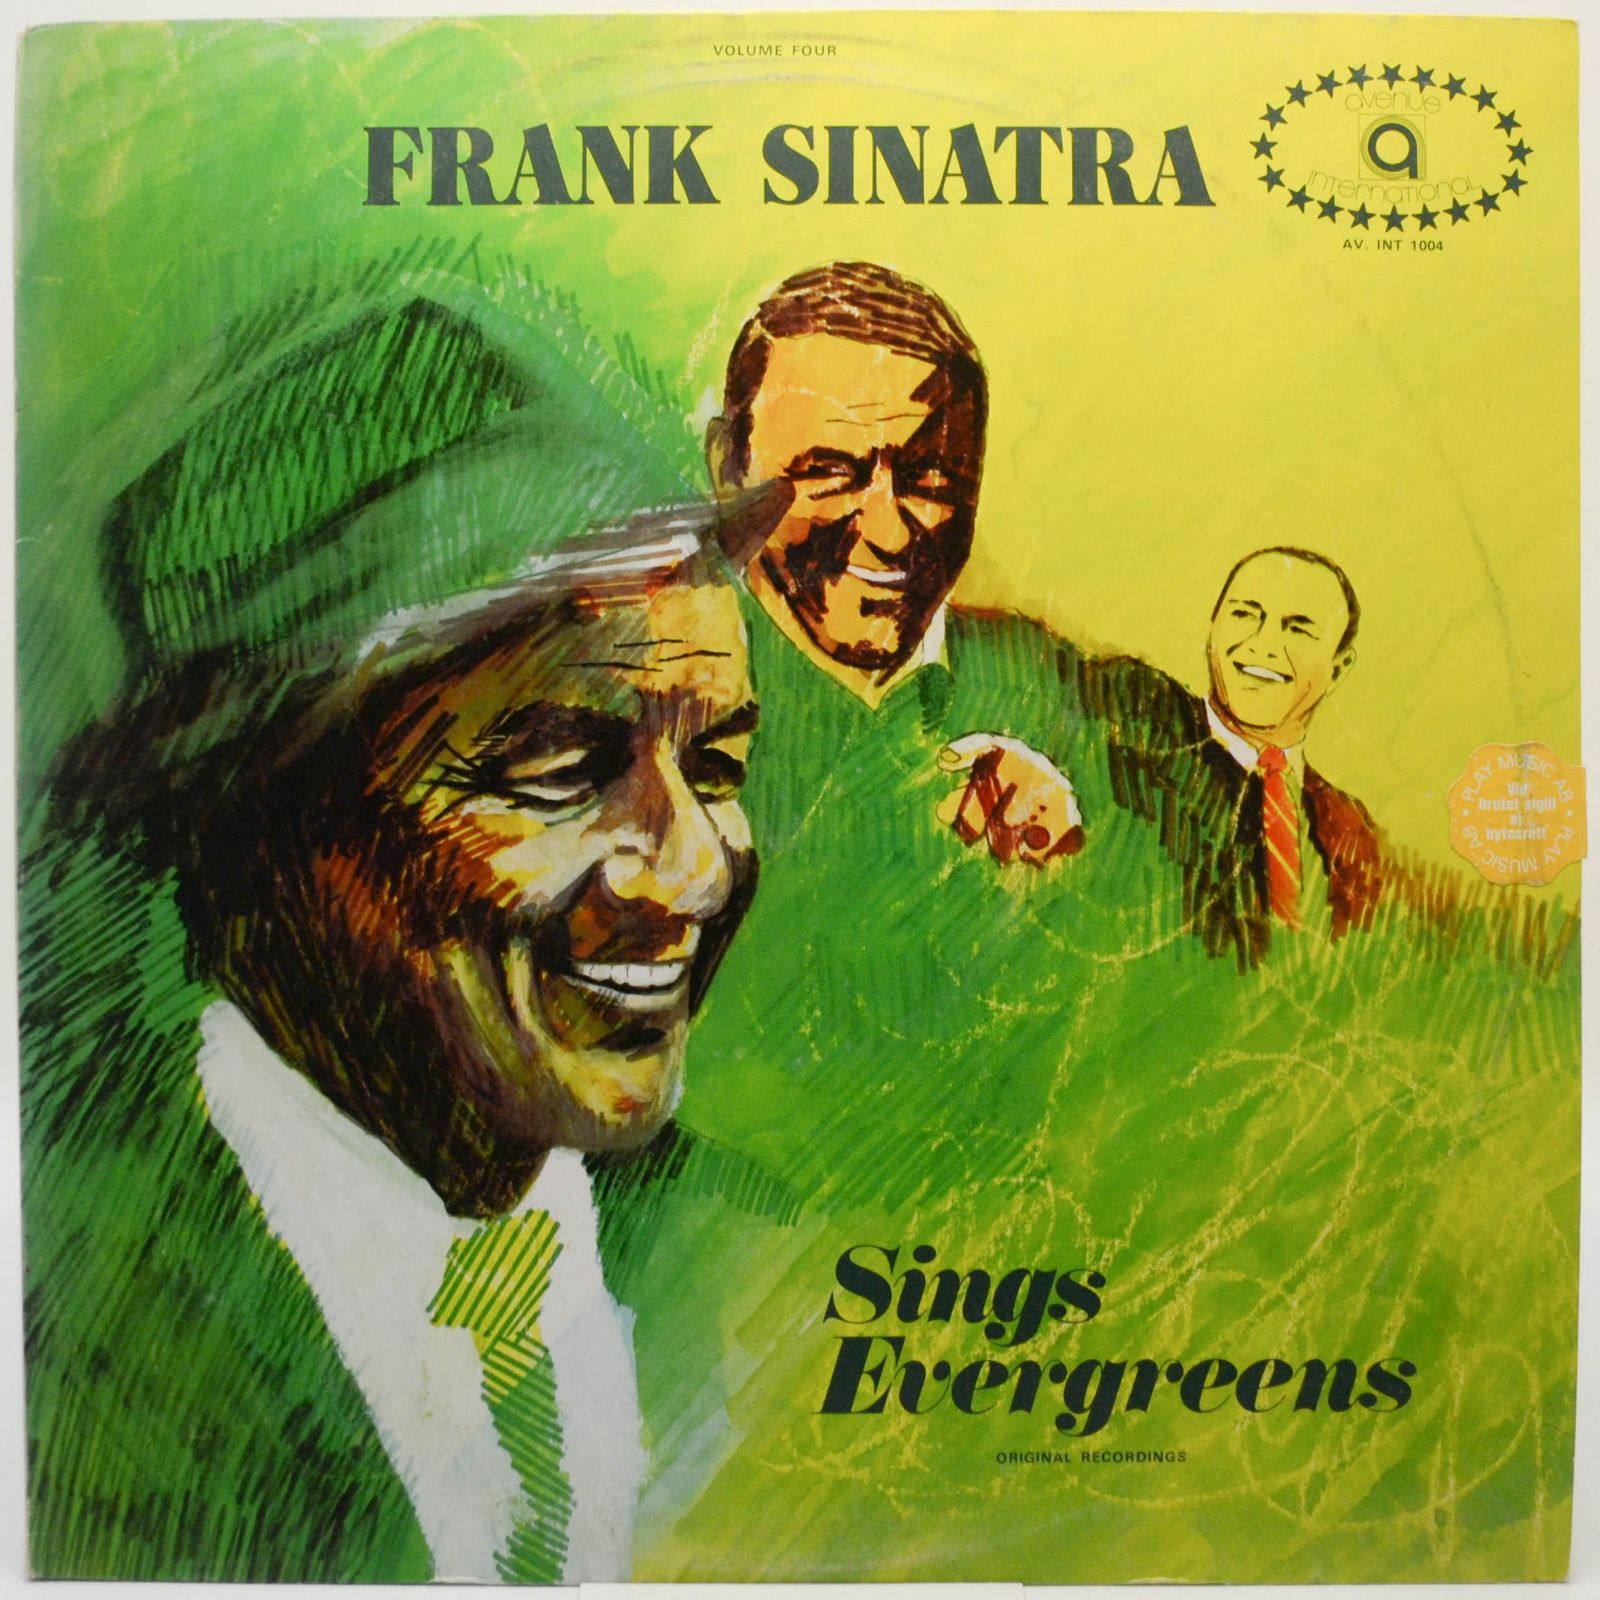 Frank Sinatra — Sings Evergreens Vol.4 (UK), 1973